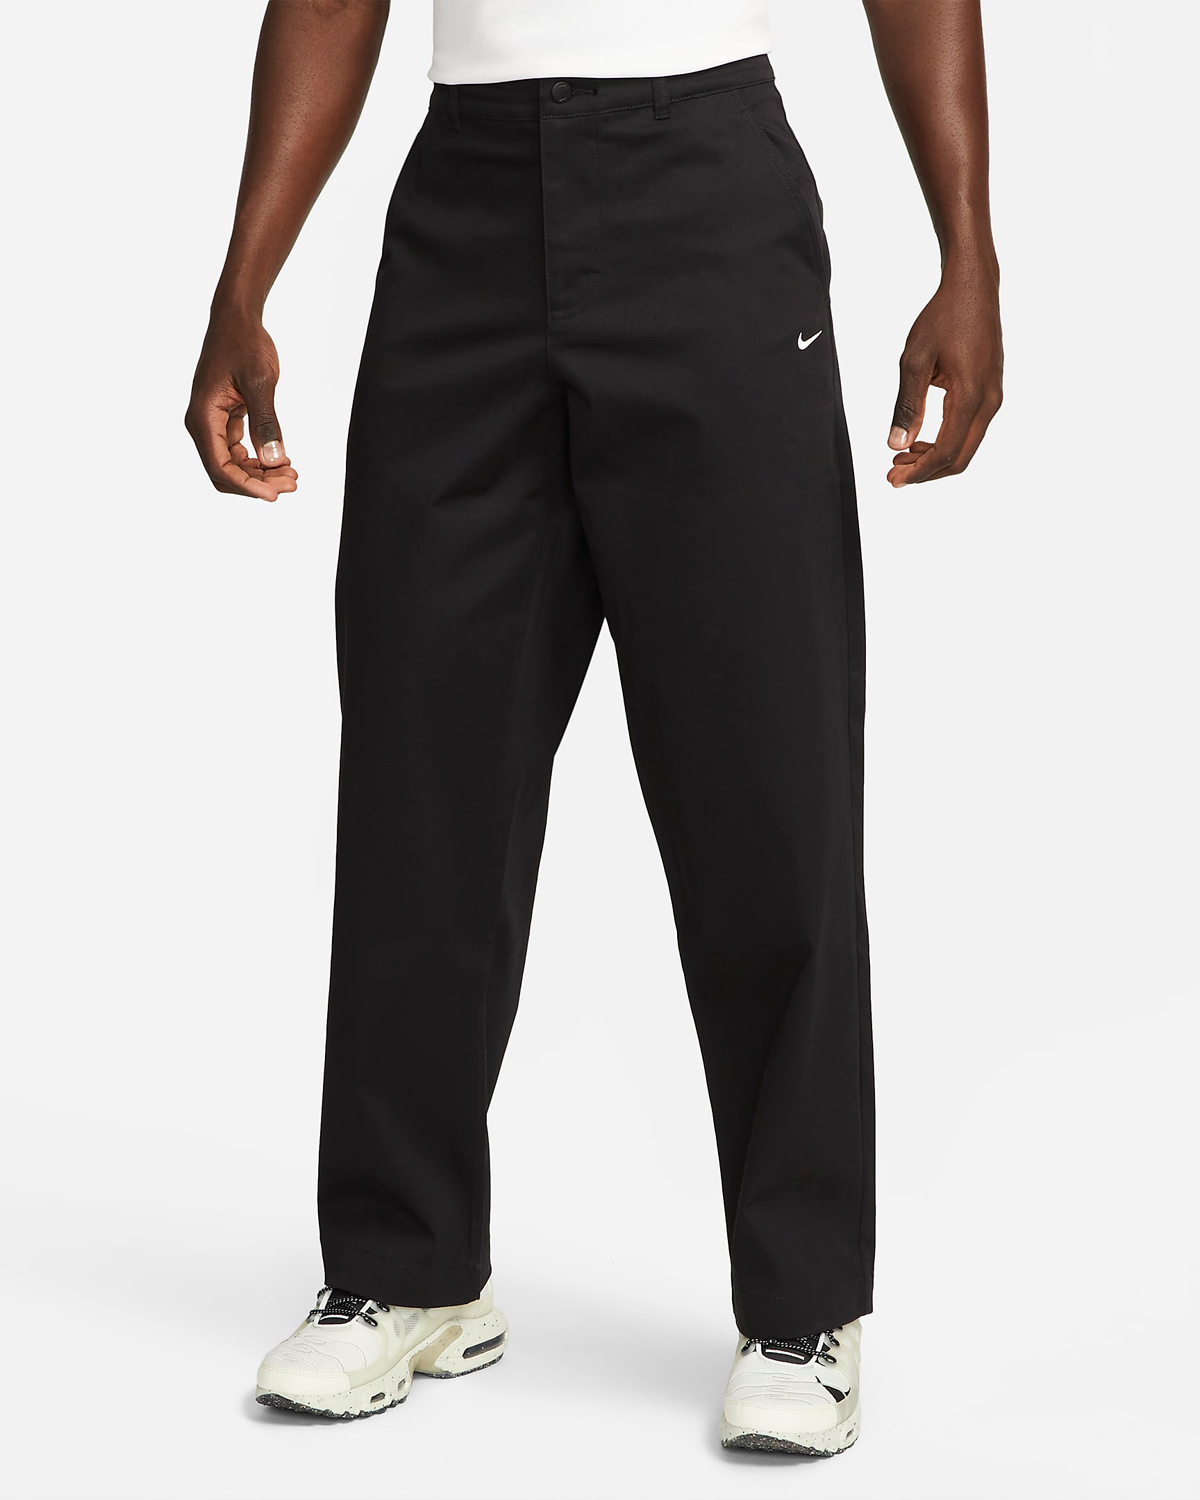 Nike-Life-Cotton-Chino-Pants-Black-1